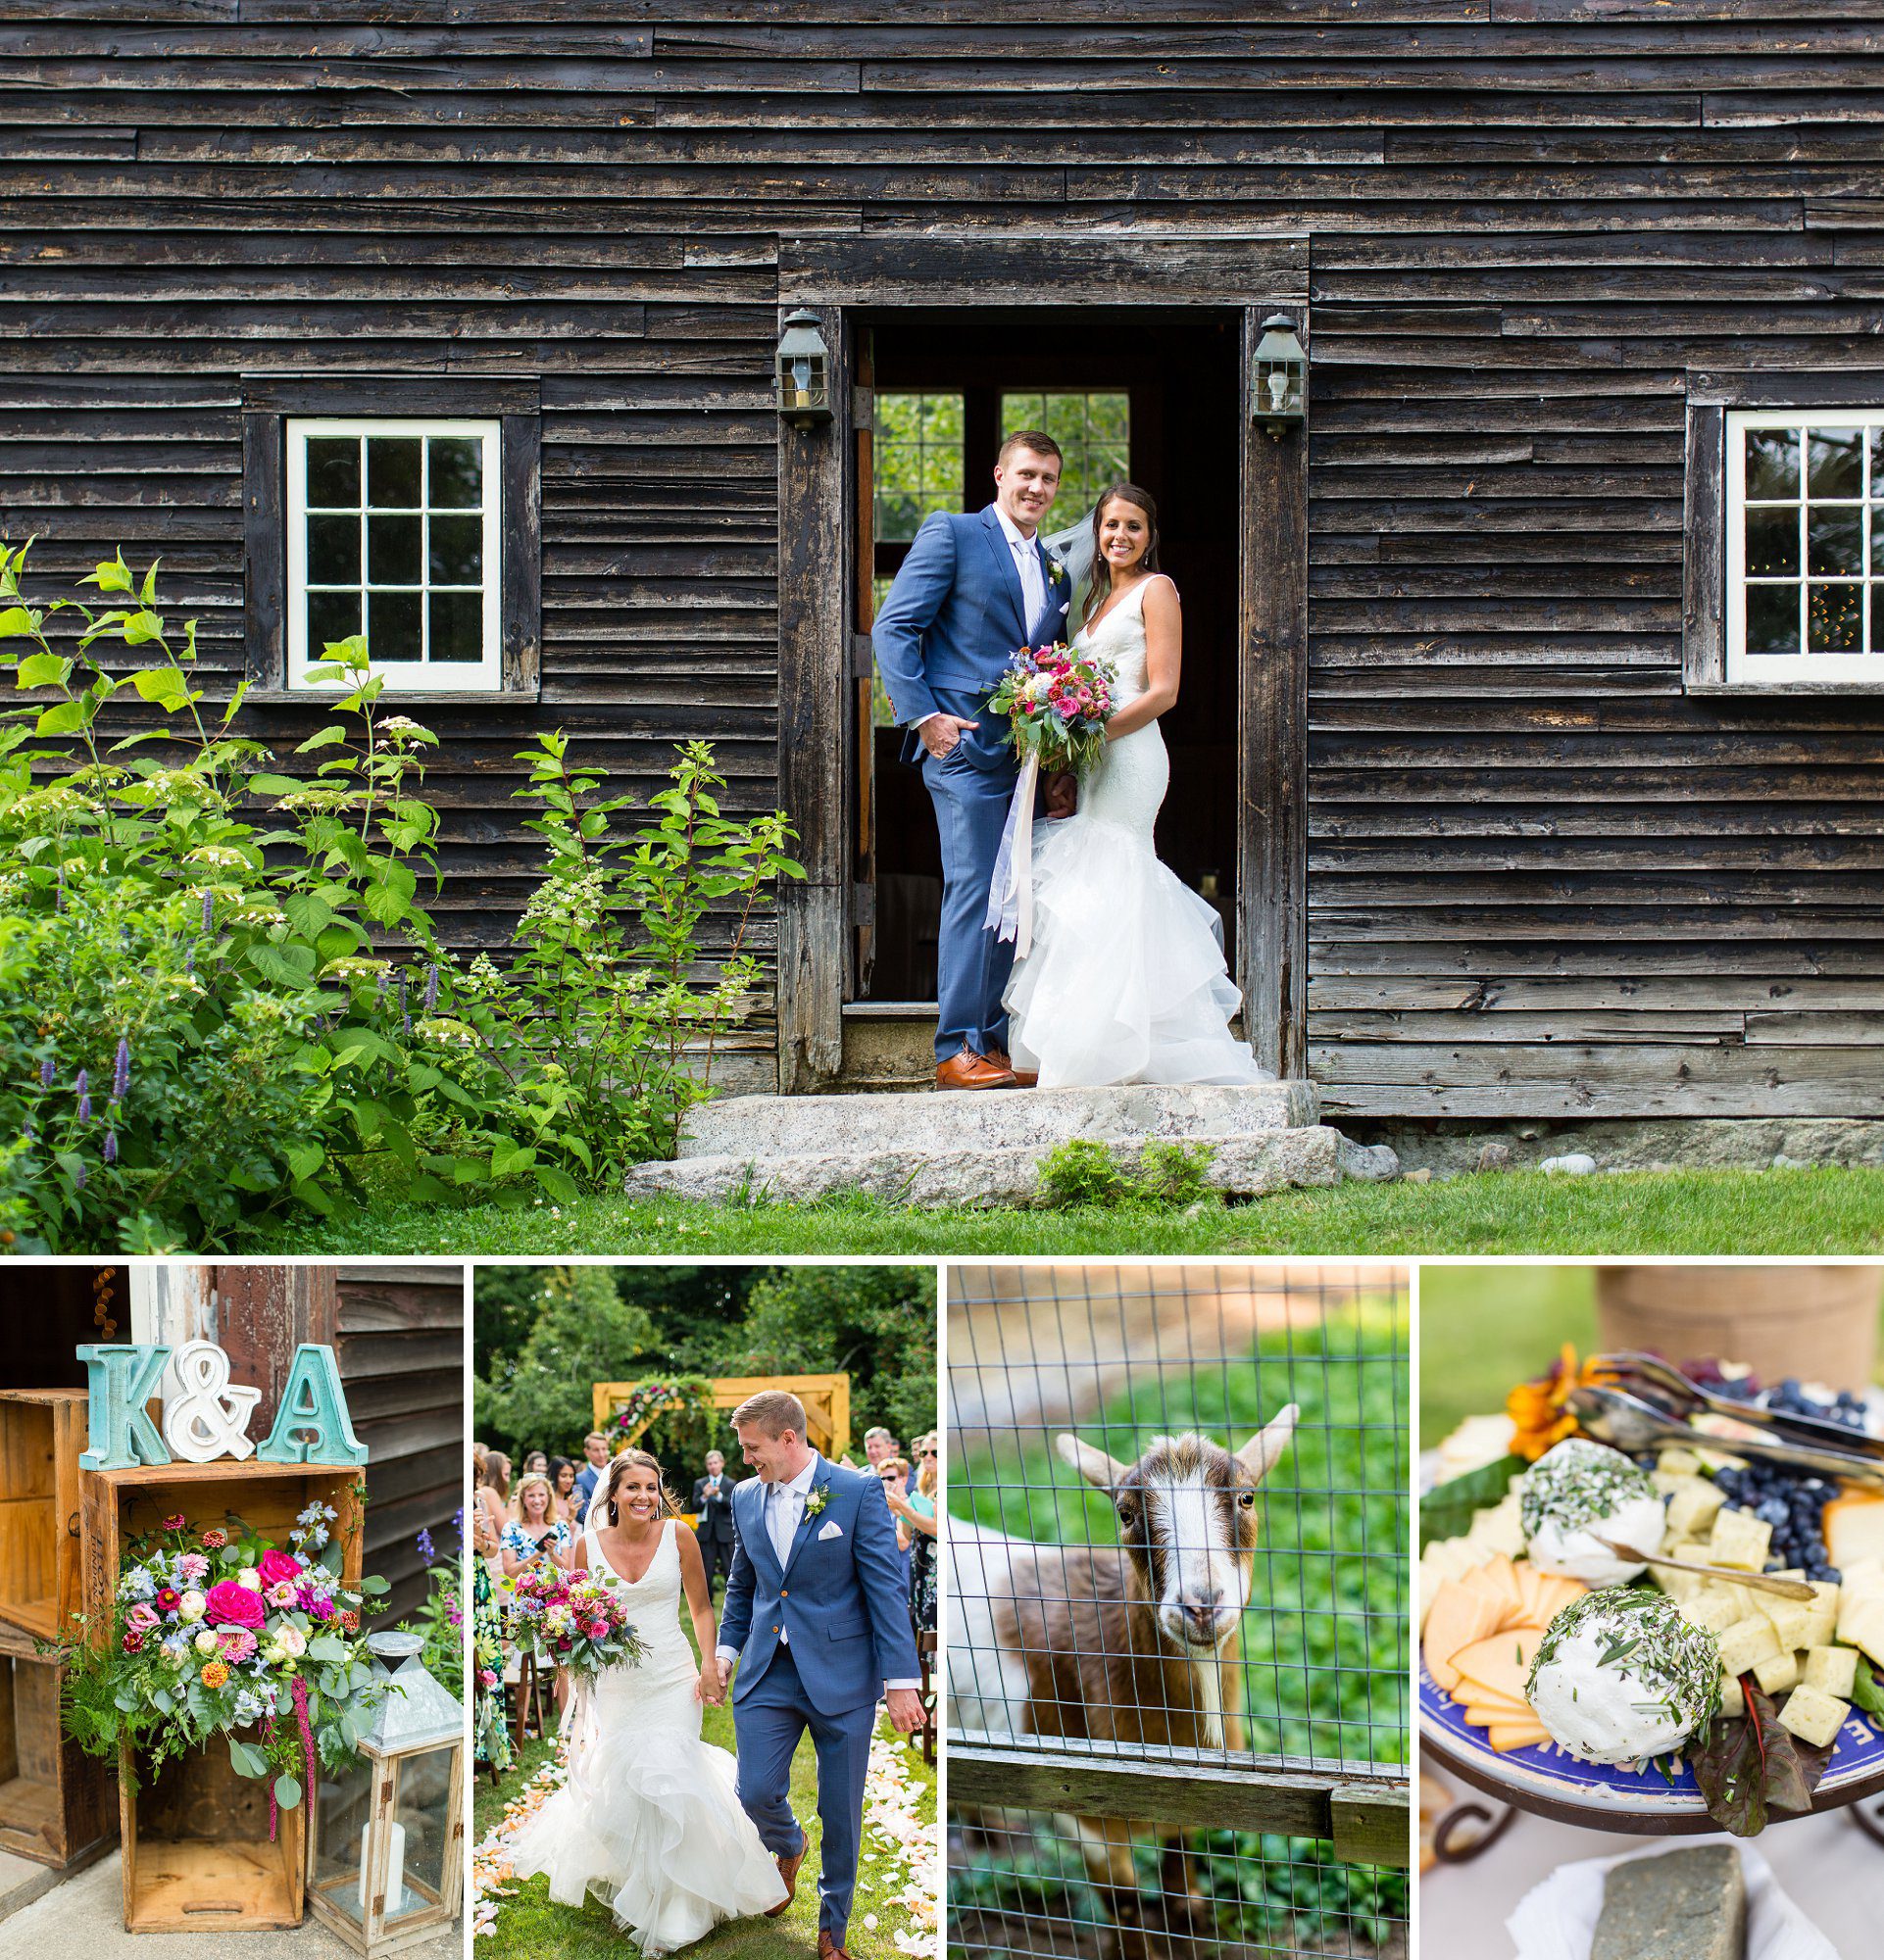 Eaton Poor Wedding at Josias River Farm in Cape Neddick, Maine | NH Wedding Photographer